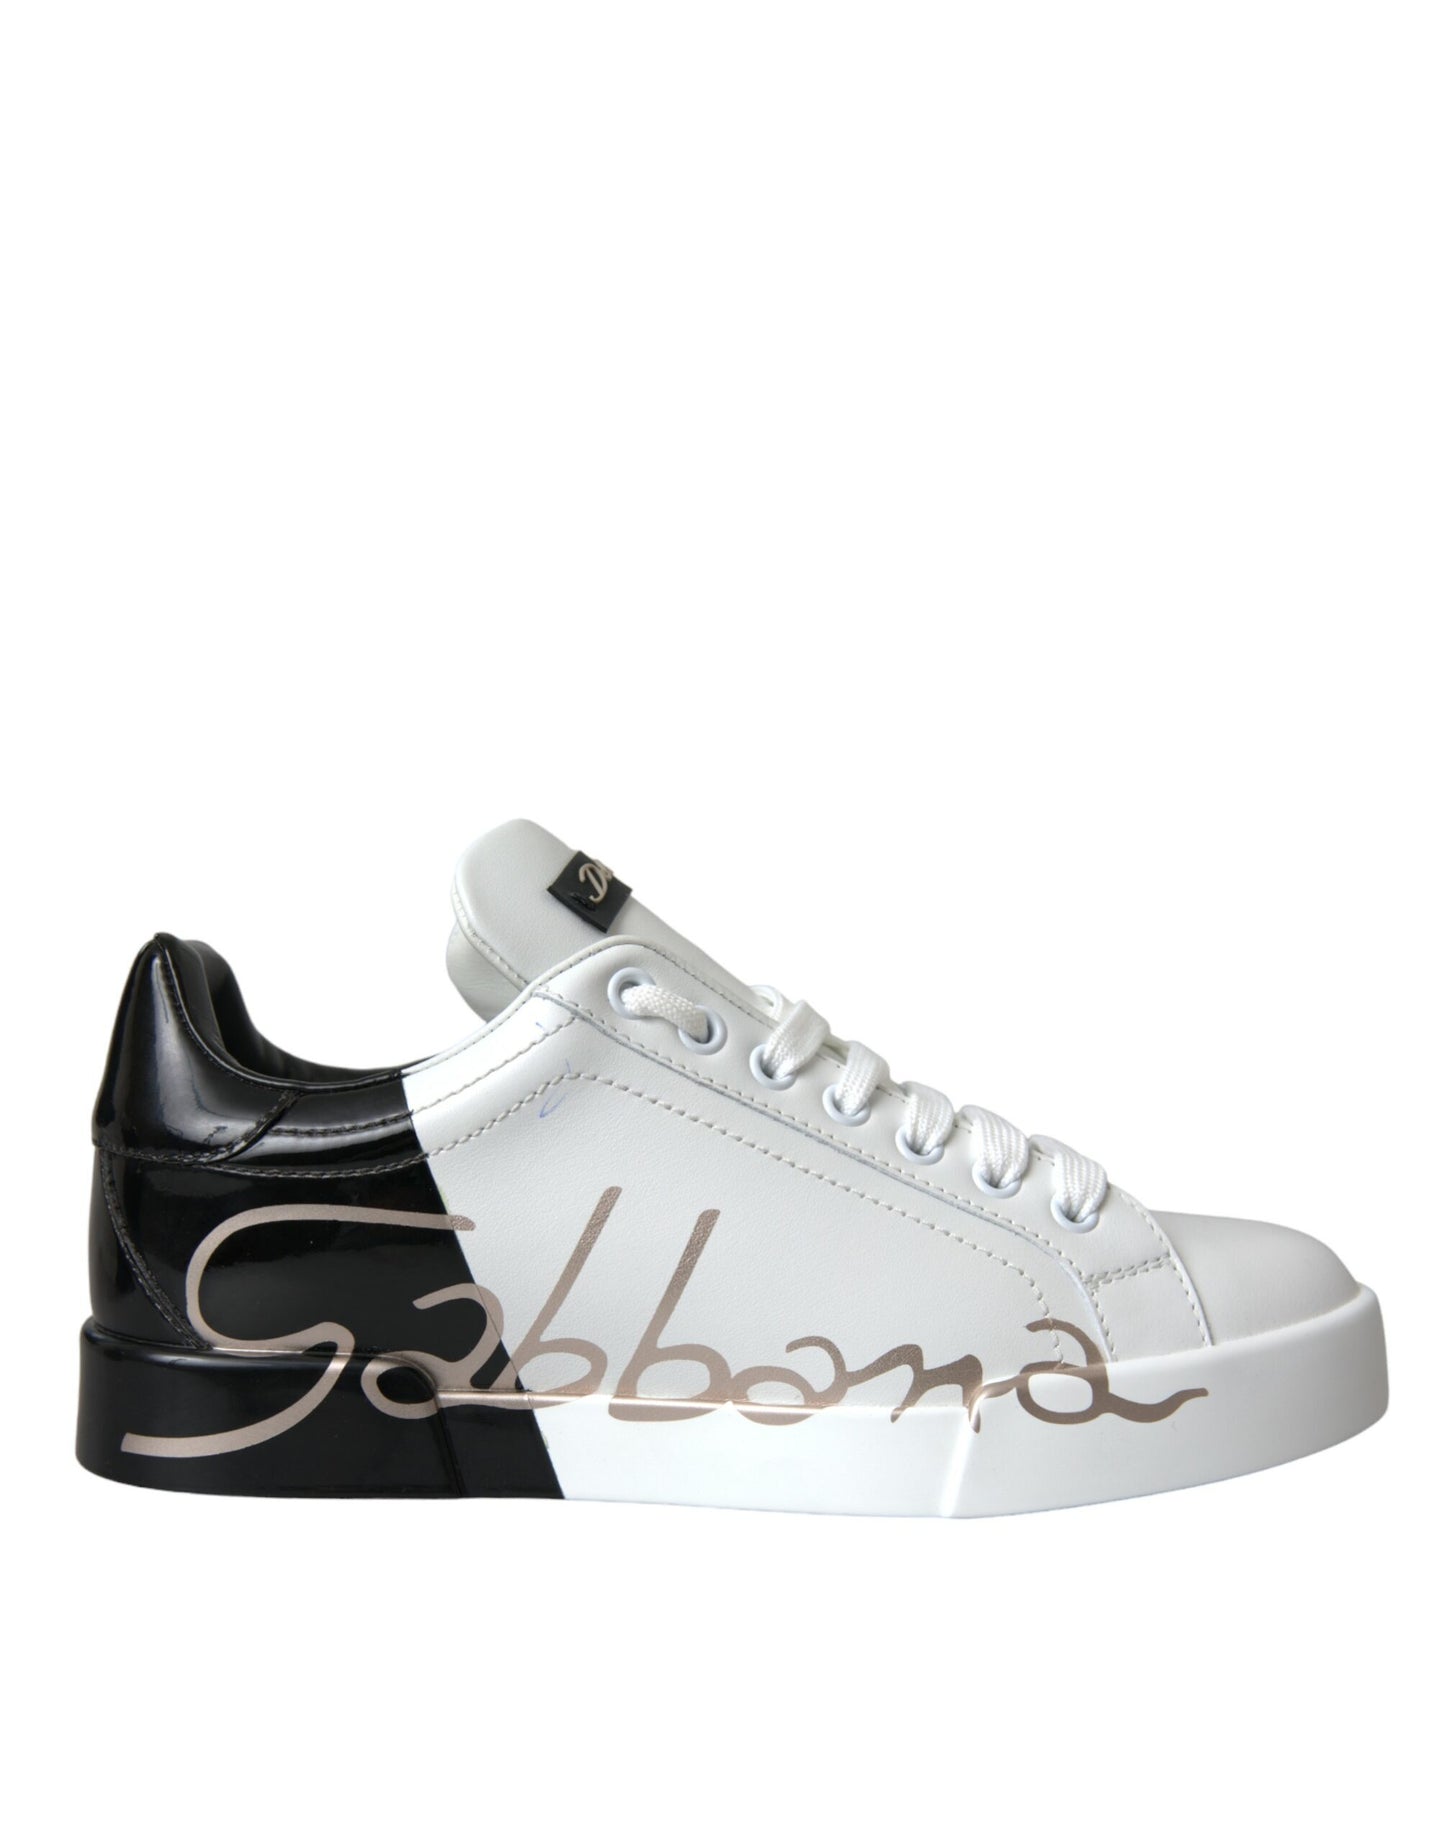 White Black Portofino Low Top Leather Sneakers Shoes